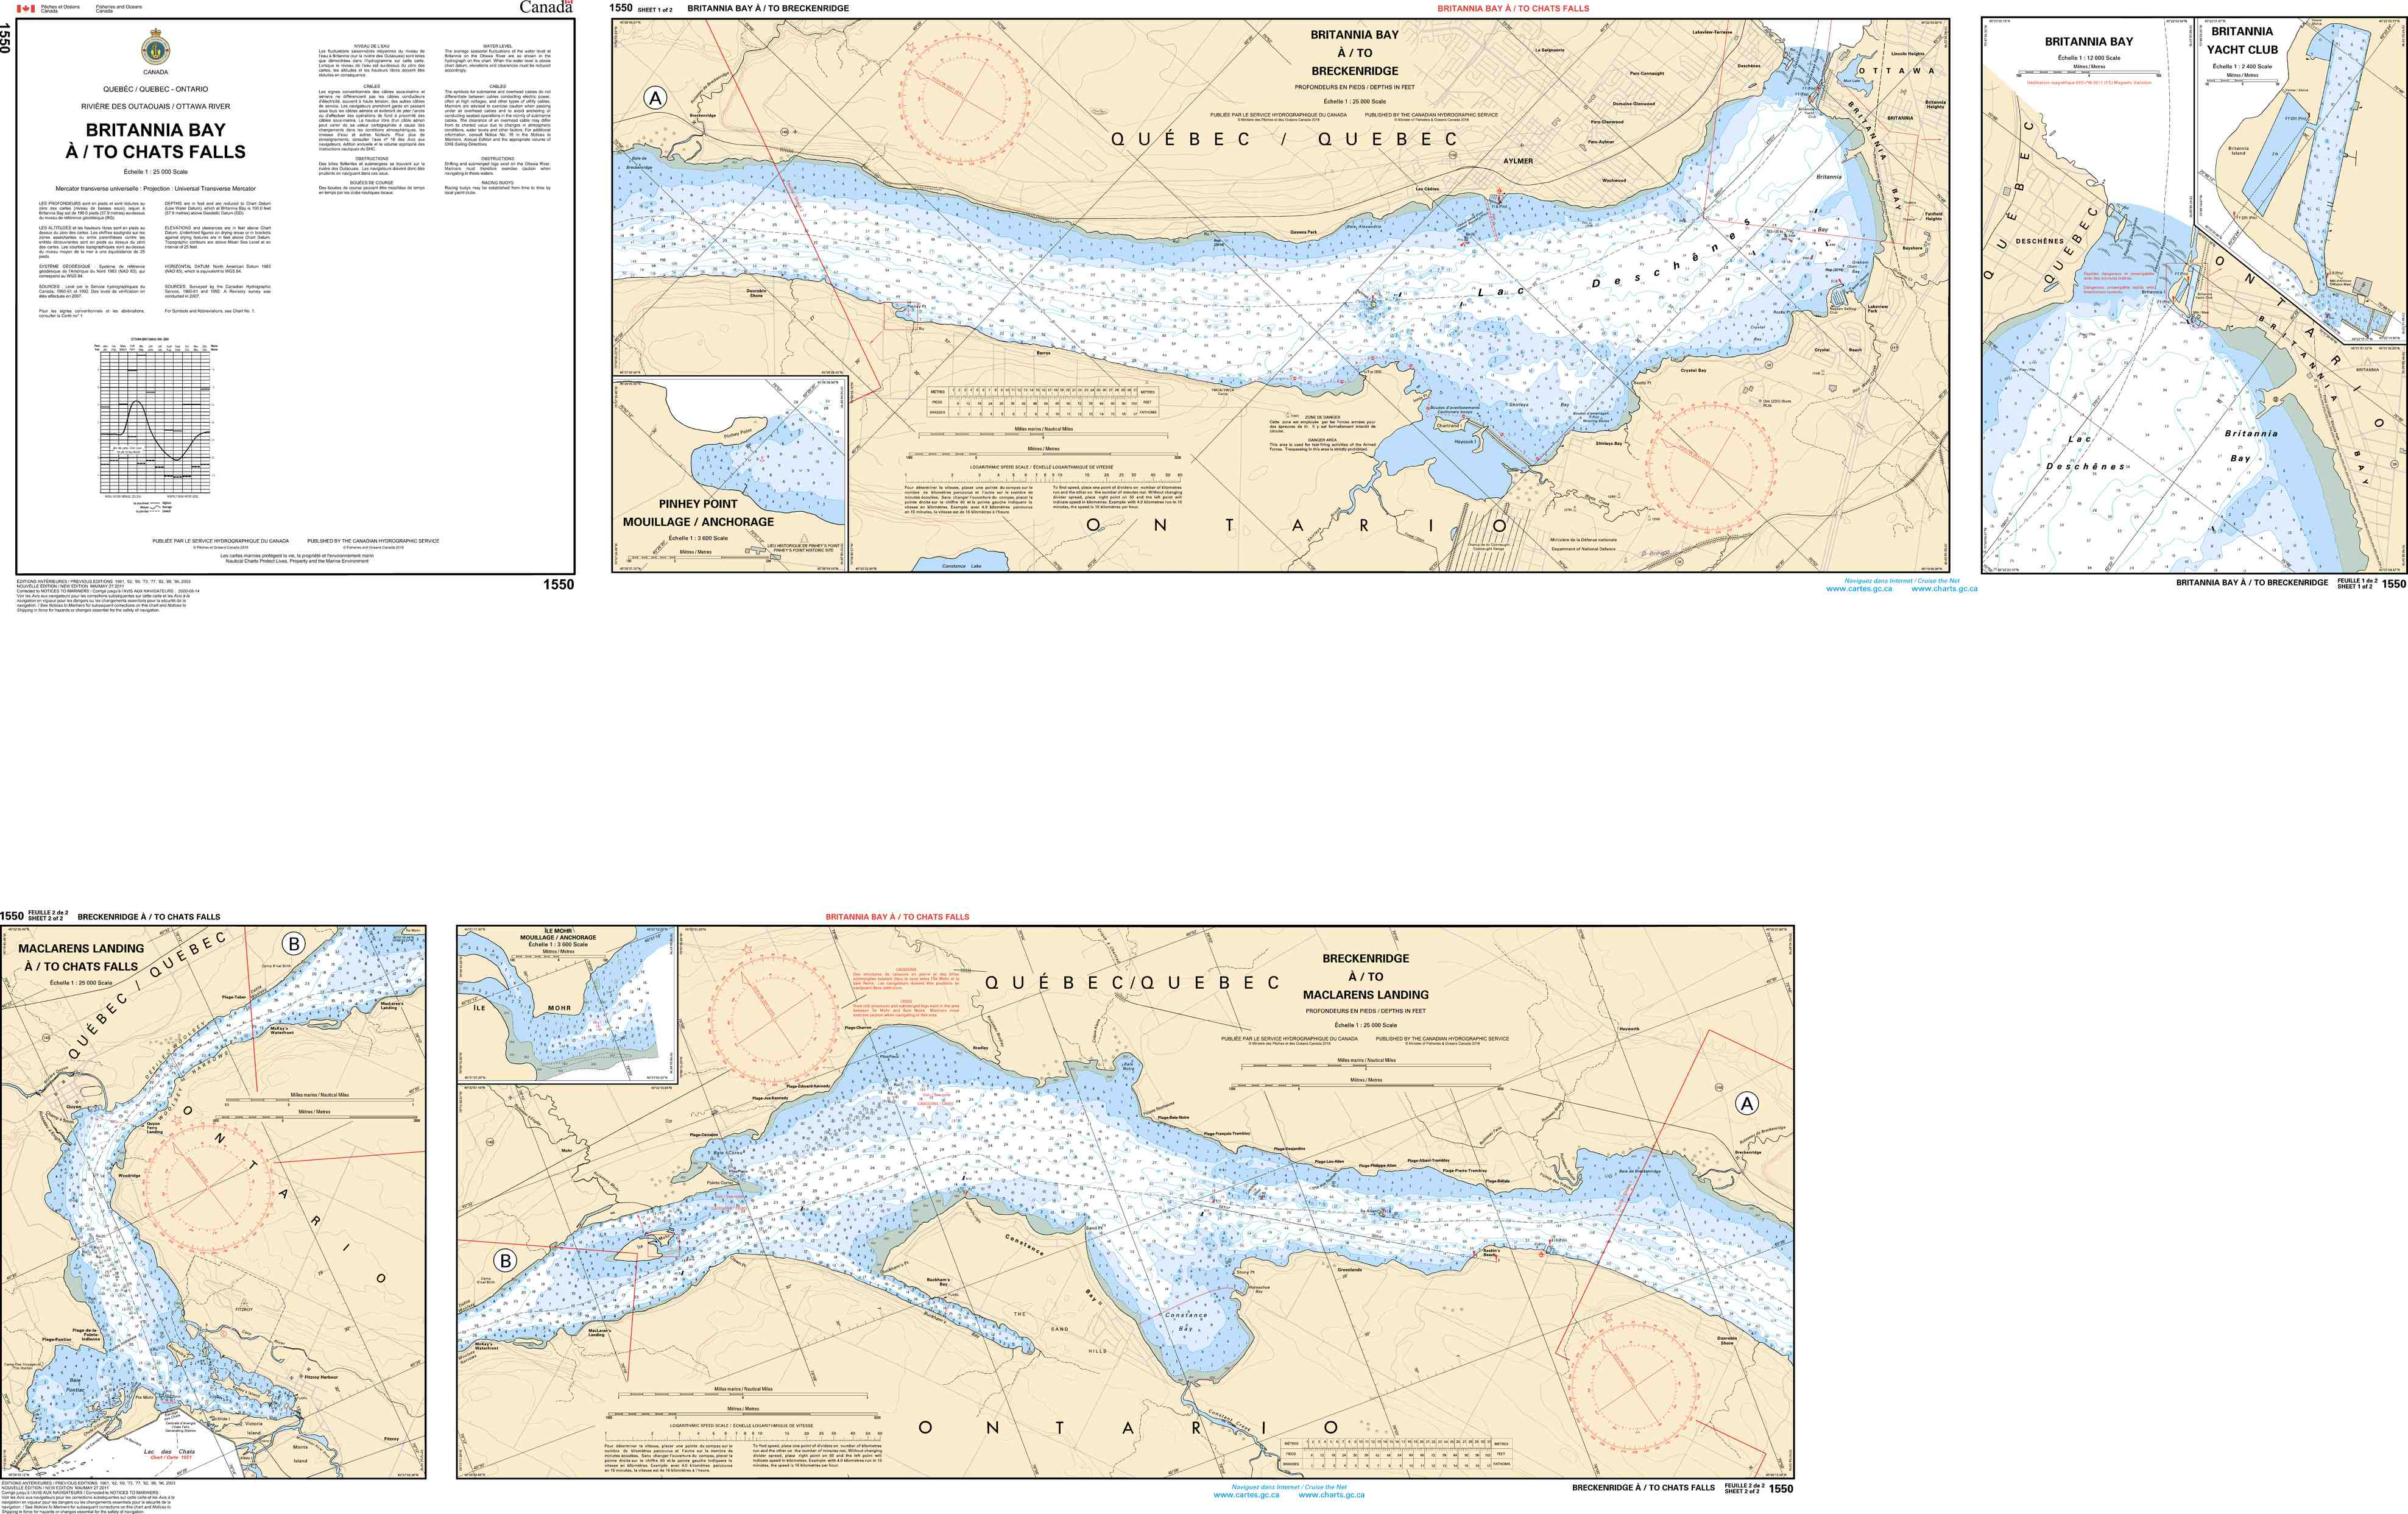 Canadian Hydrographic Service Nautical Chart CHS1550: Britannia Bay à/to Chats Falls